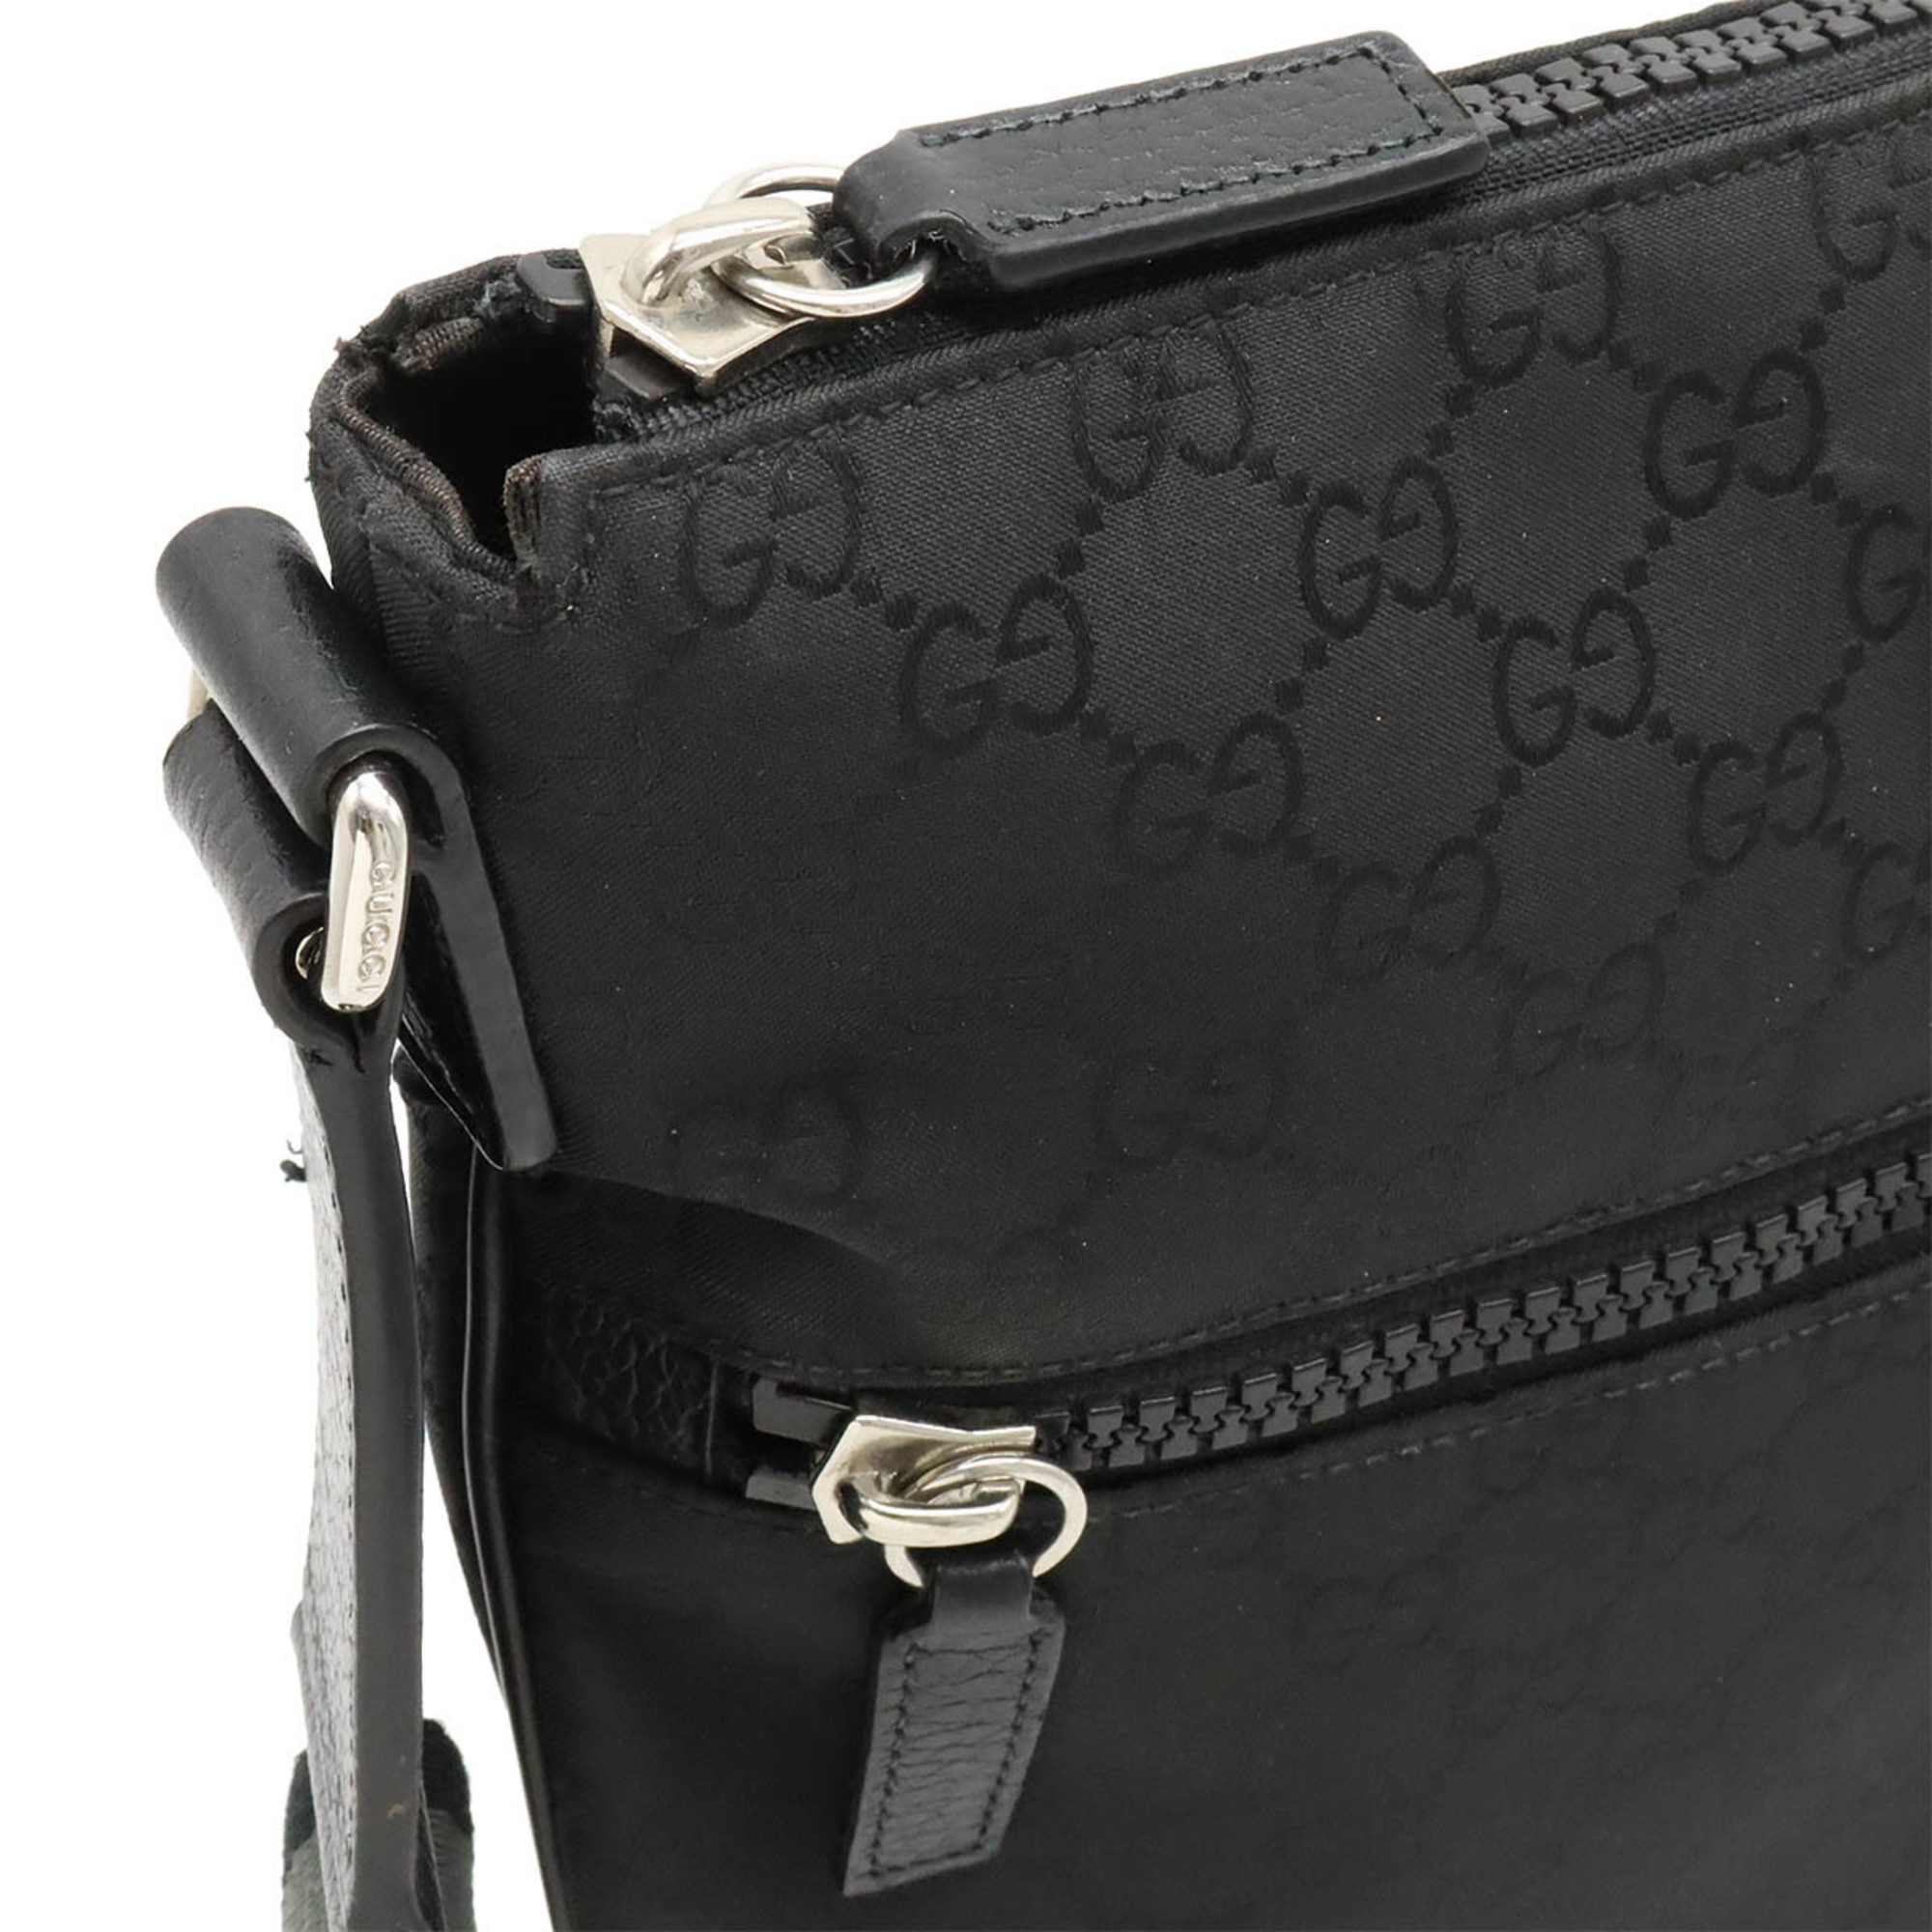 GUCCI GG nylon shoulder bag leather black gray 509639